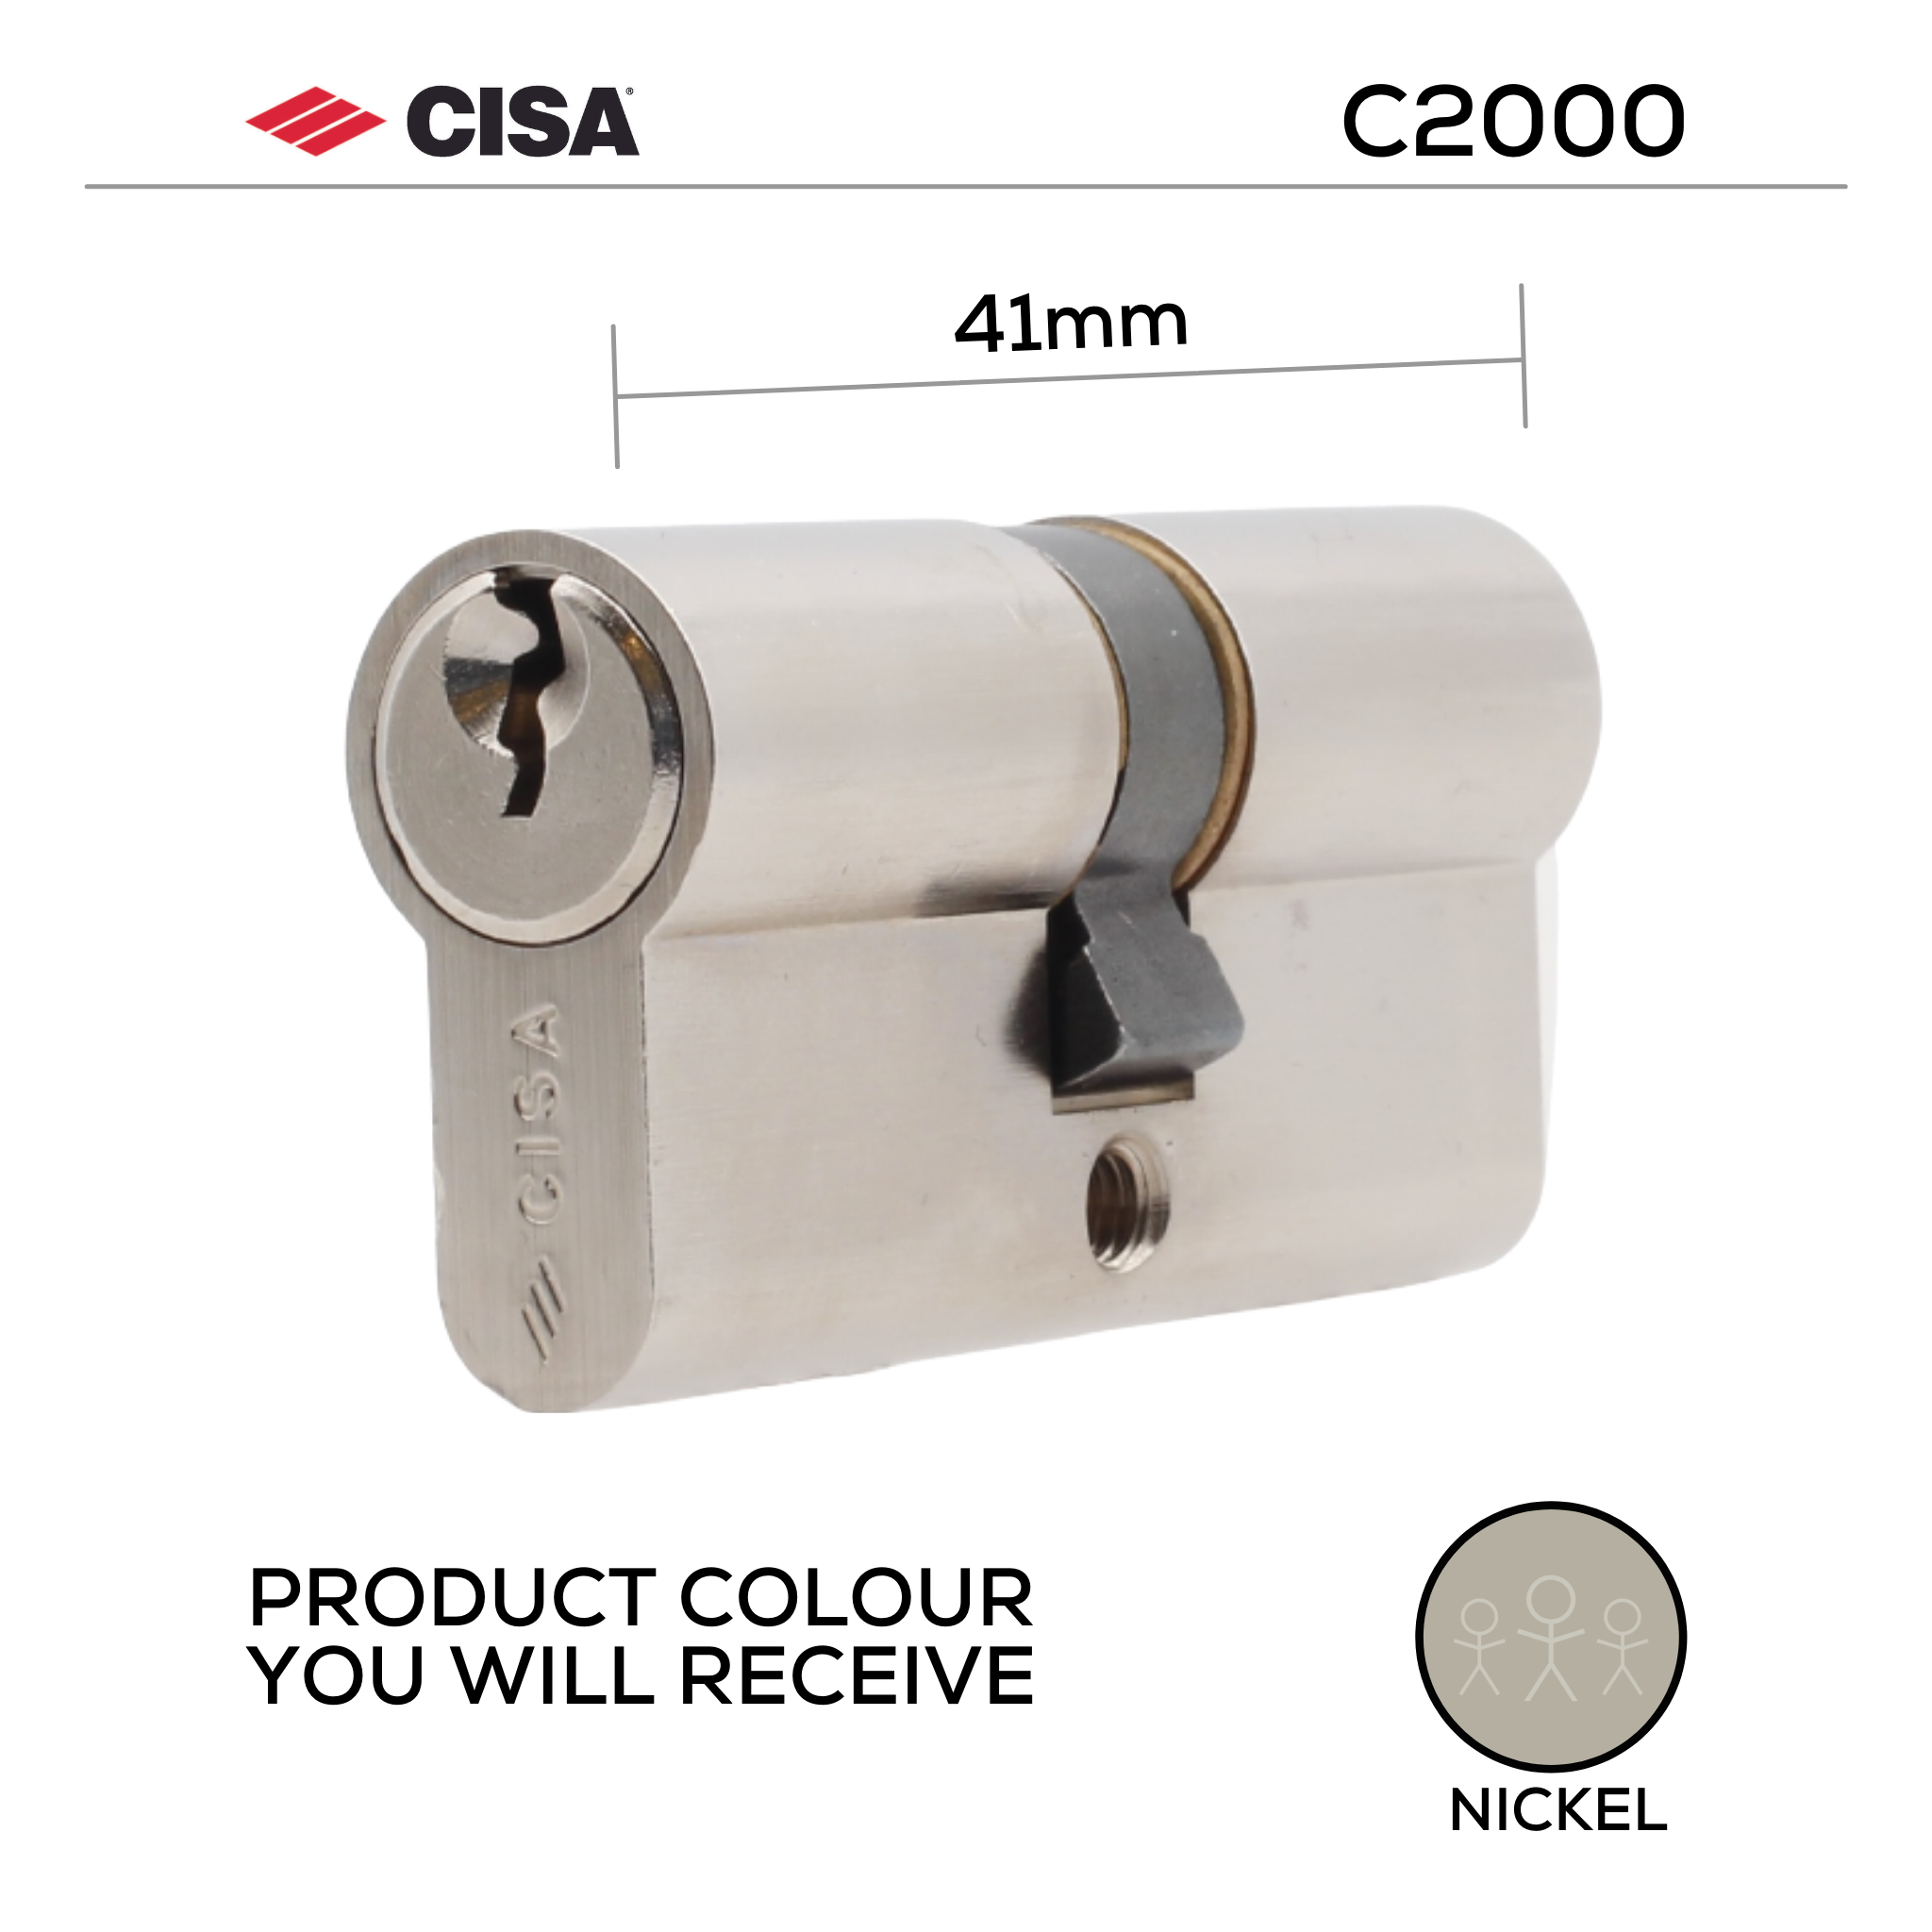 08210-01-12-KD, 41mm - 20/20, Double Cylinder, C2000, Key to Key, Keyed to Differ (Standard), 3 Keys, 5 Pin, Nickel, CISA